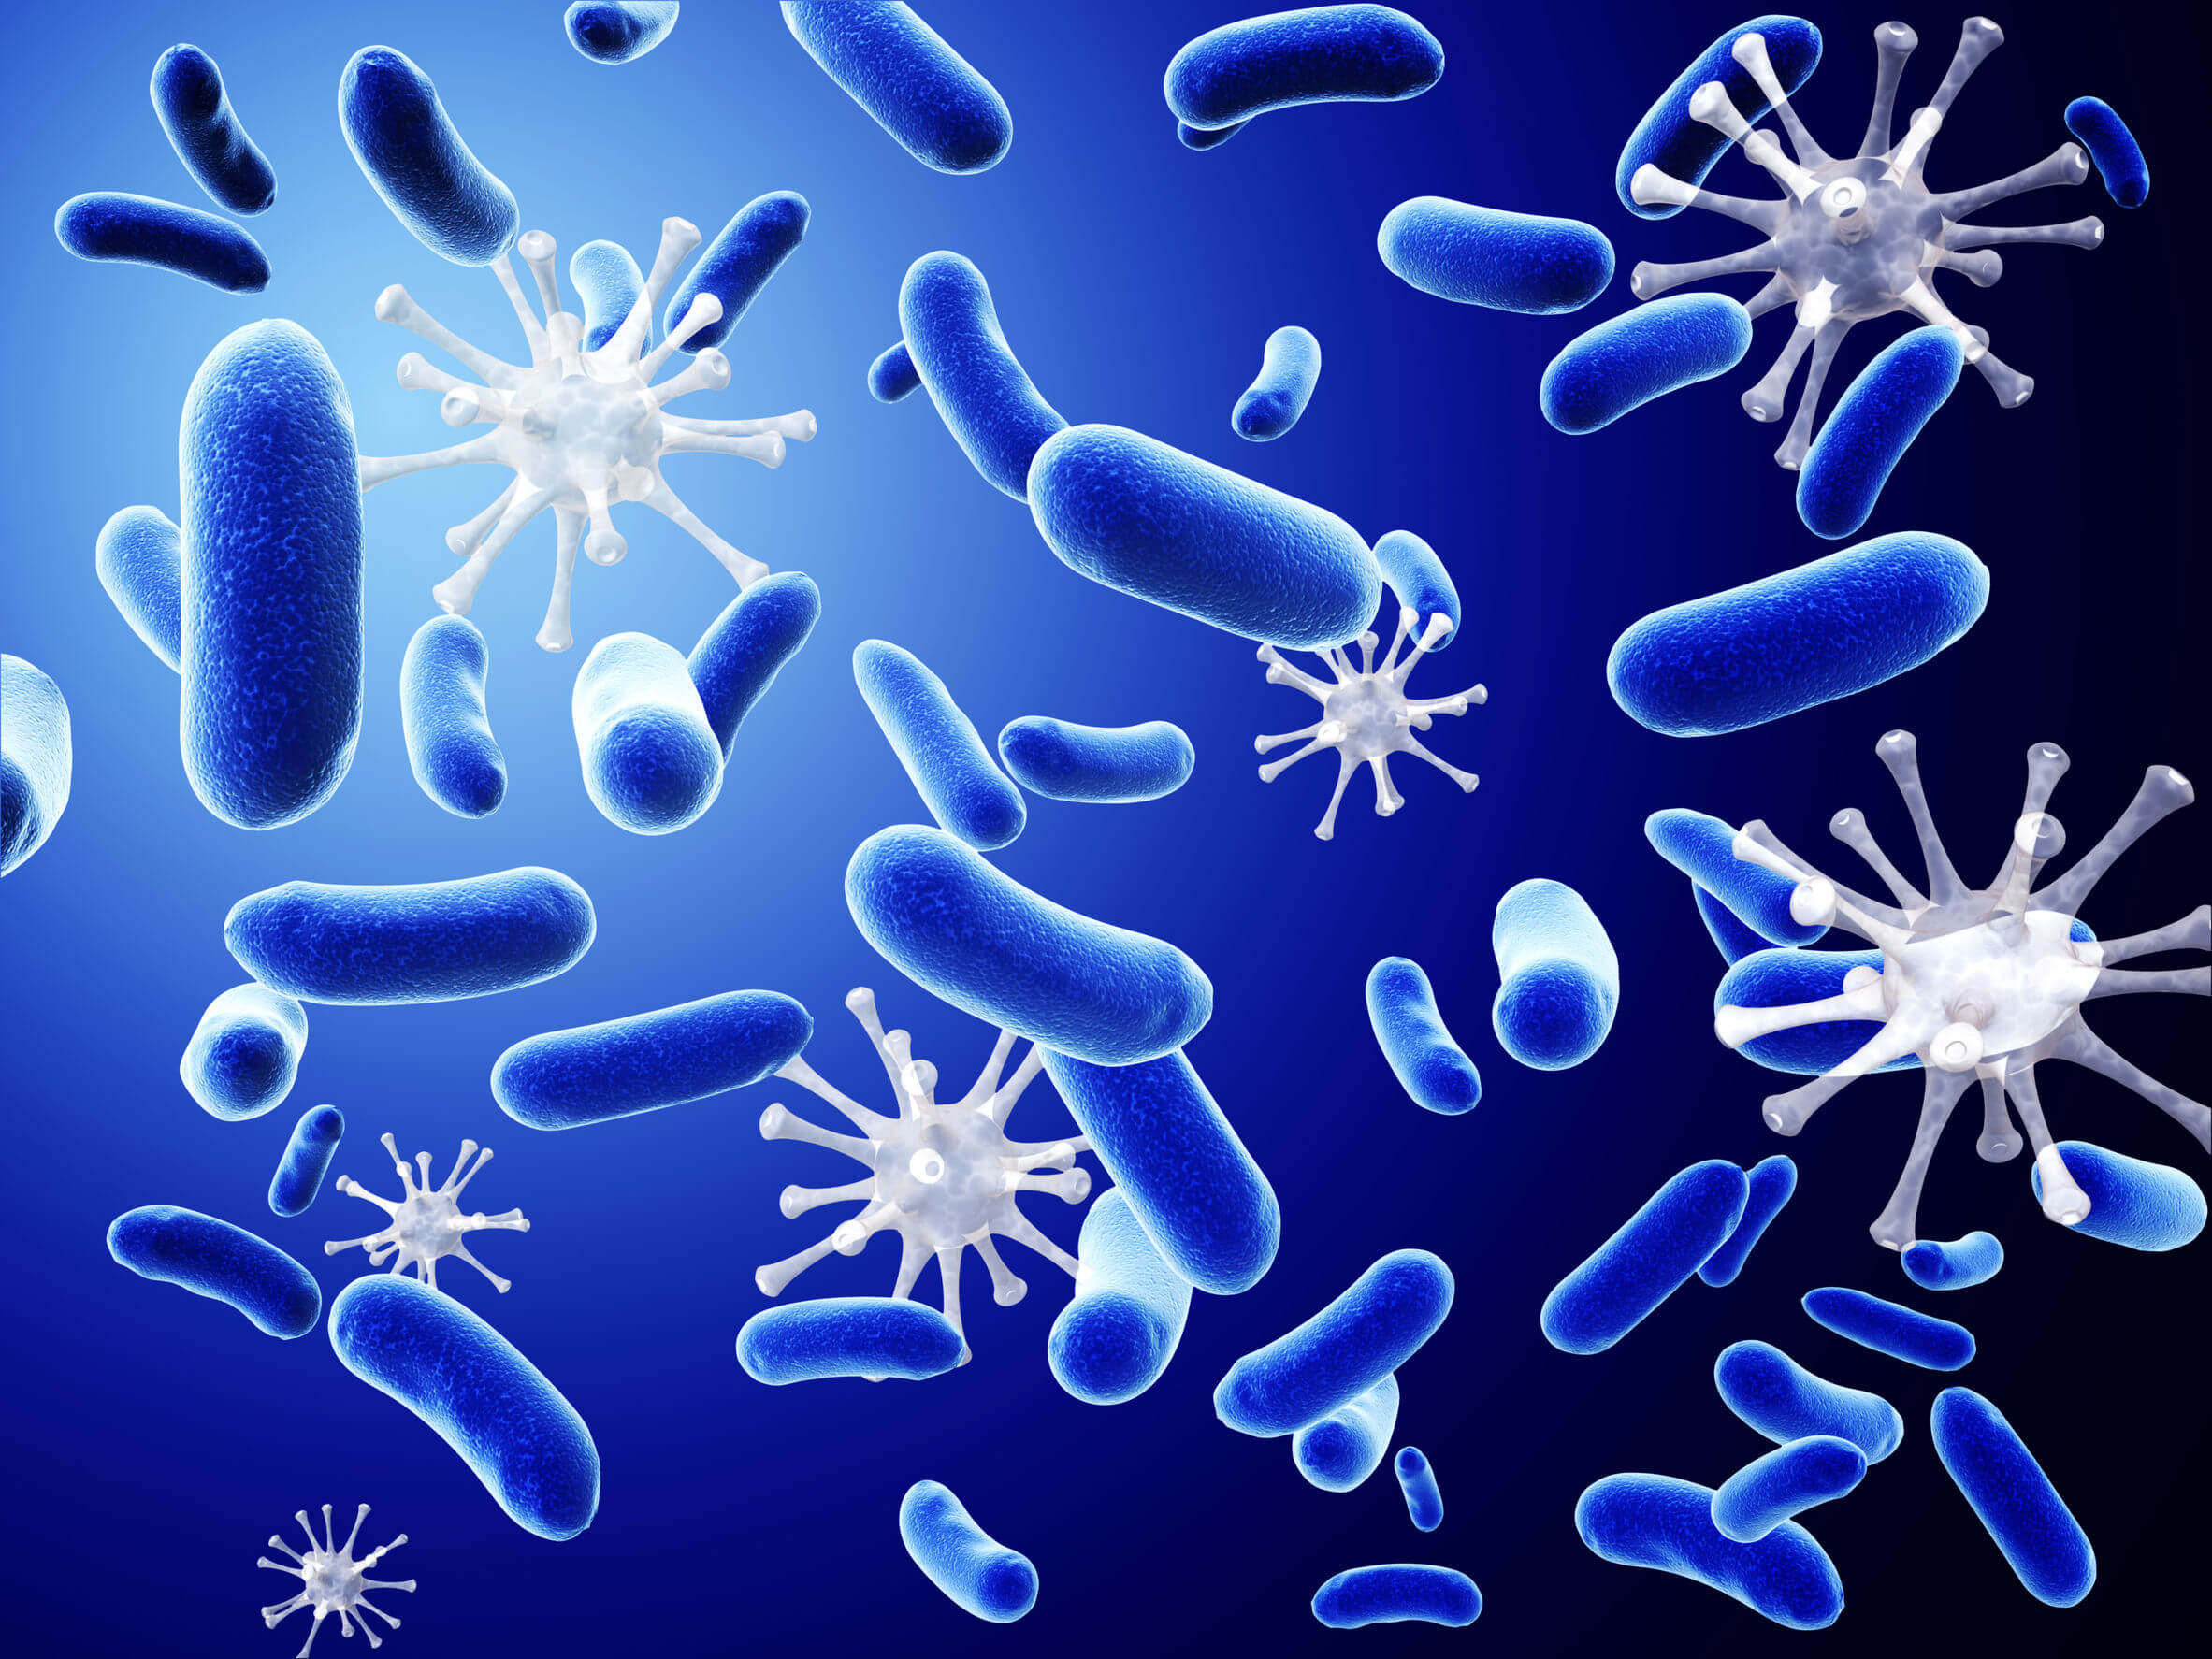 Las células Natural Killer se encargan de proteger al cuerpo contra múltiples infecciones.